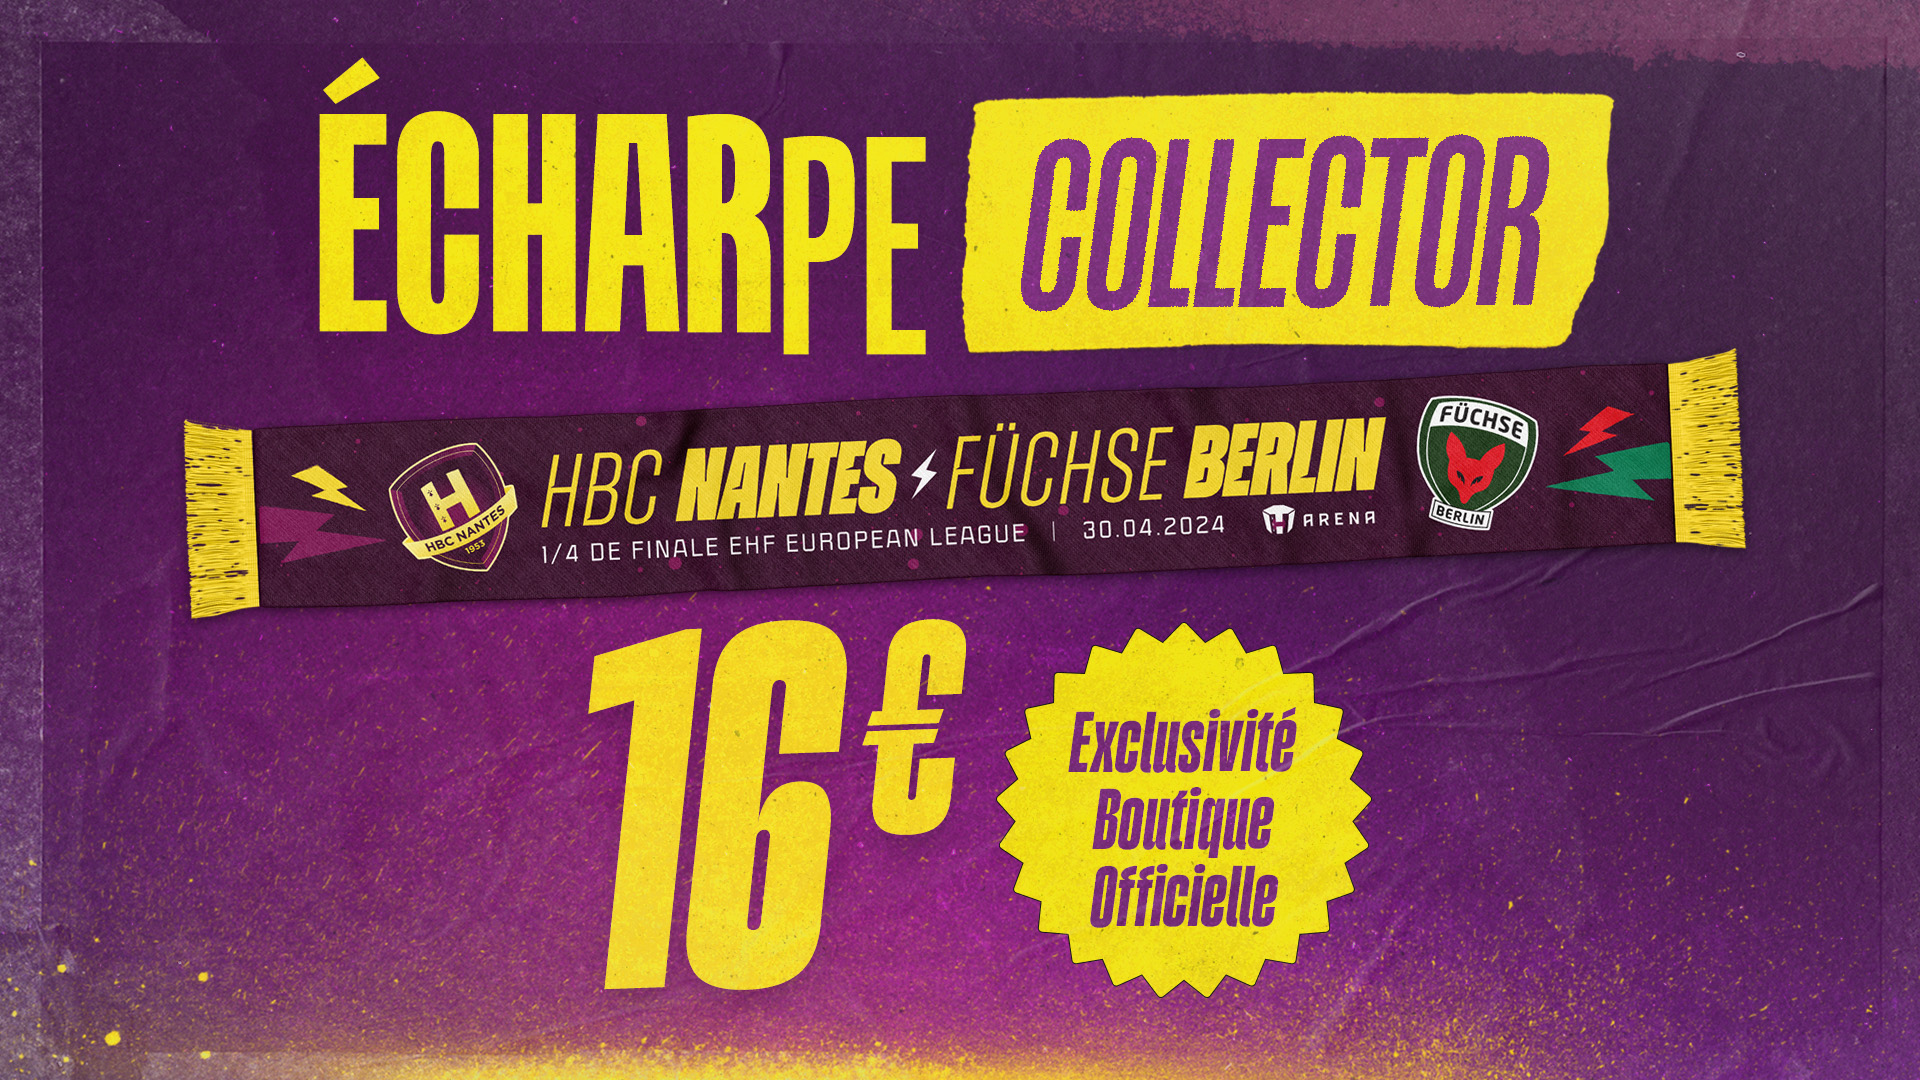 Echarpe collector HBC Nantes - Berlin